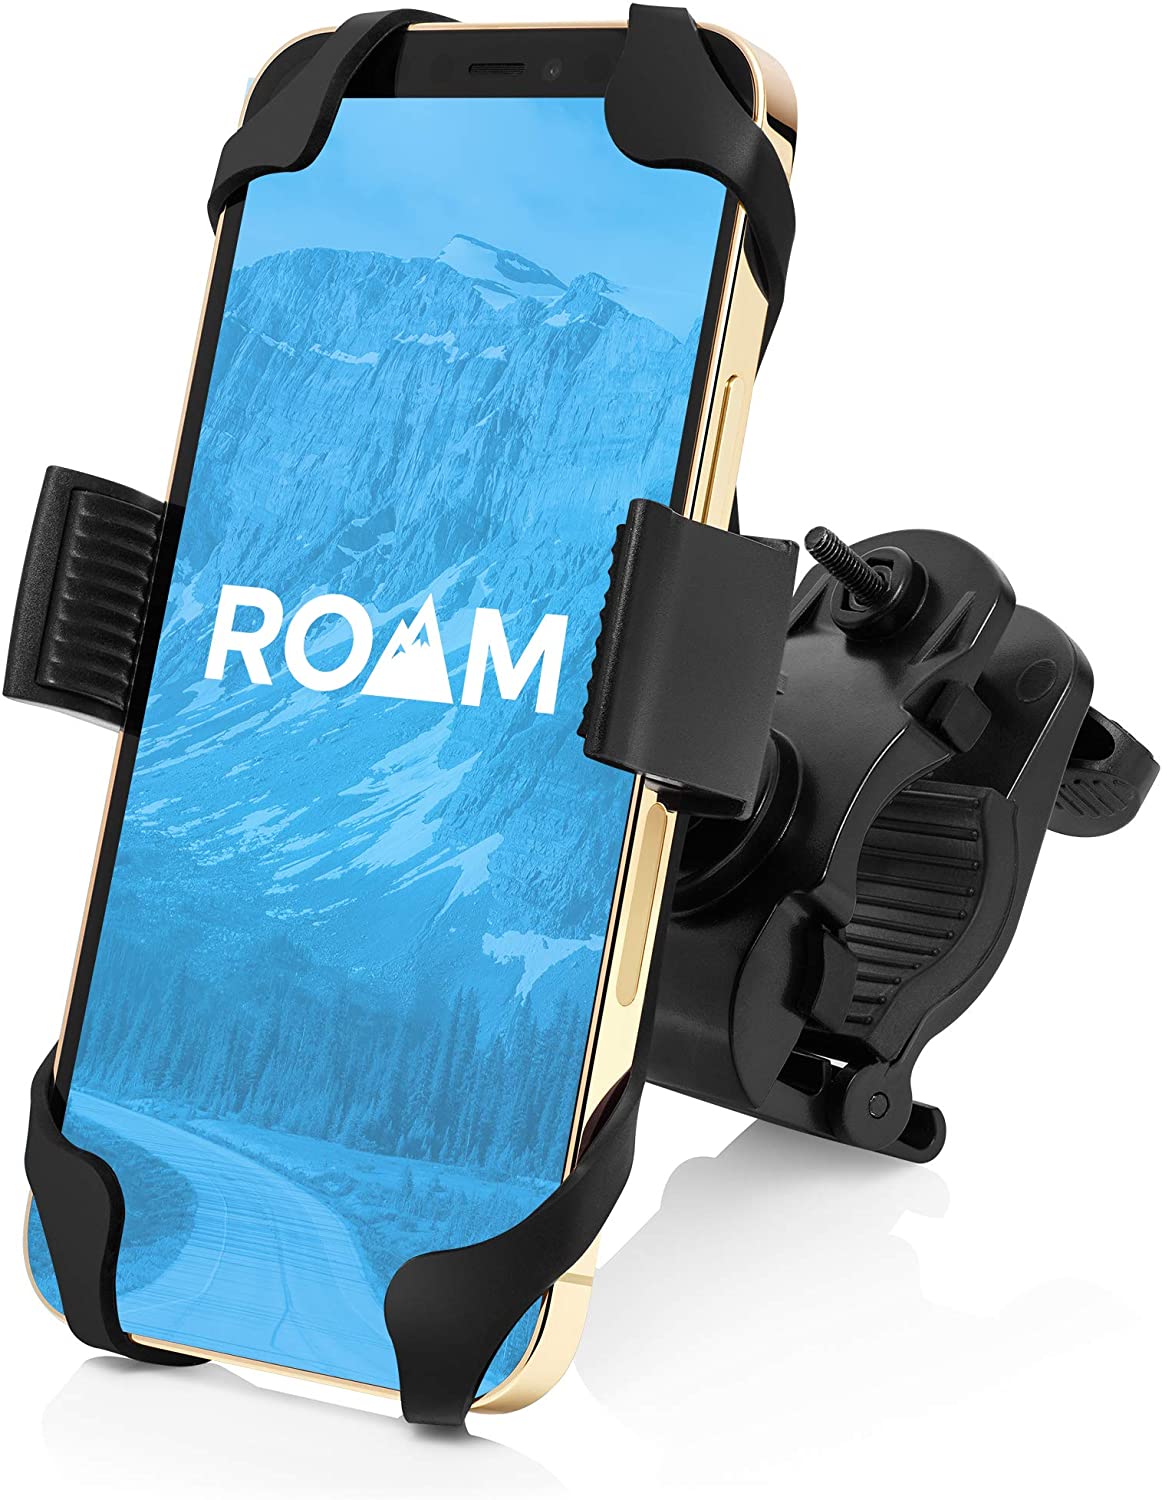 Motor Scooter 12V Easy Mount Weatherproof Cap for Apple LG Samsung HTC Phones 